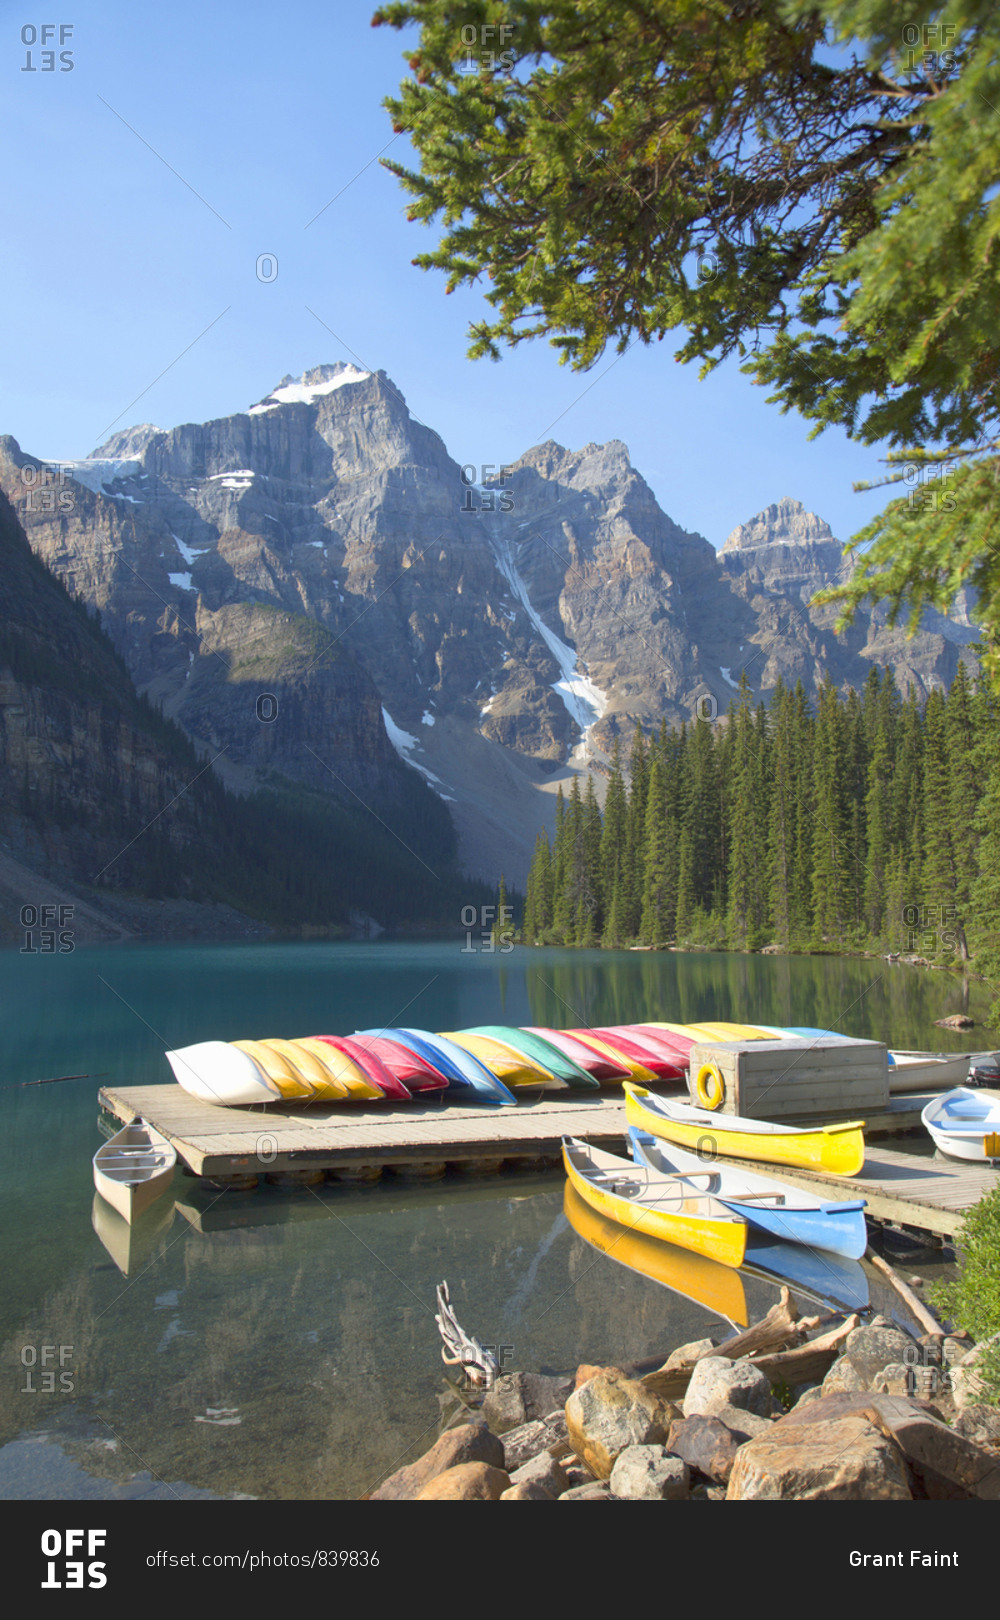 Rental canoes at Moraine Lake in Banff National Park